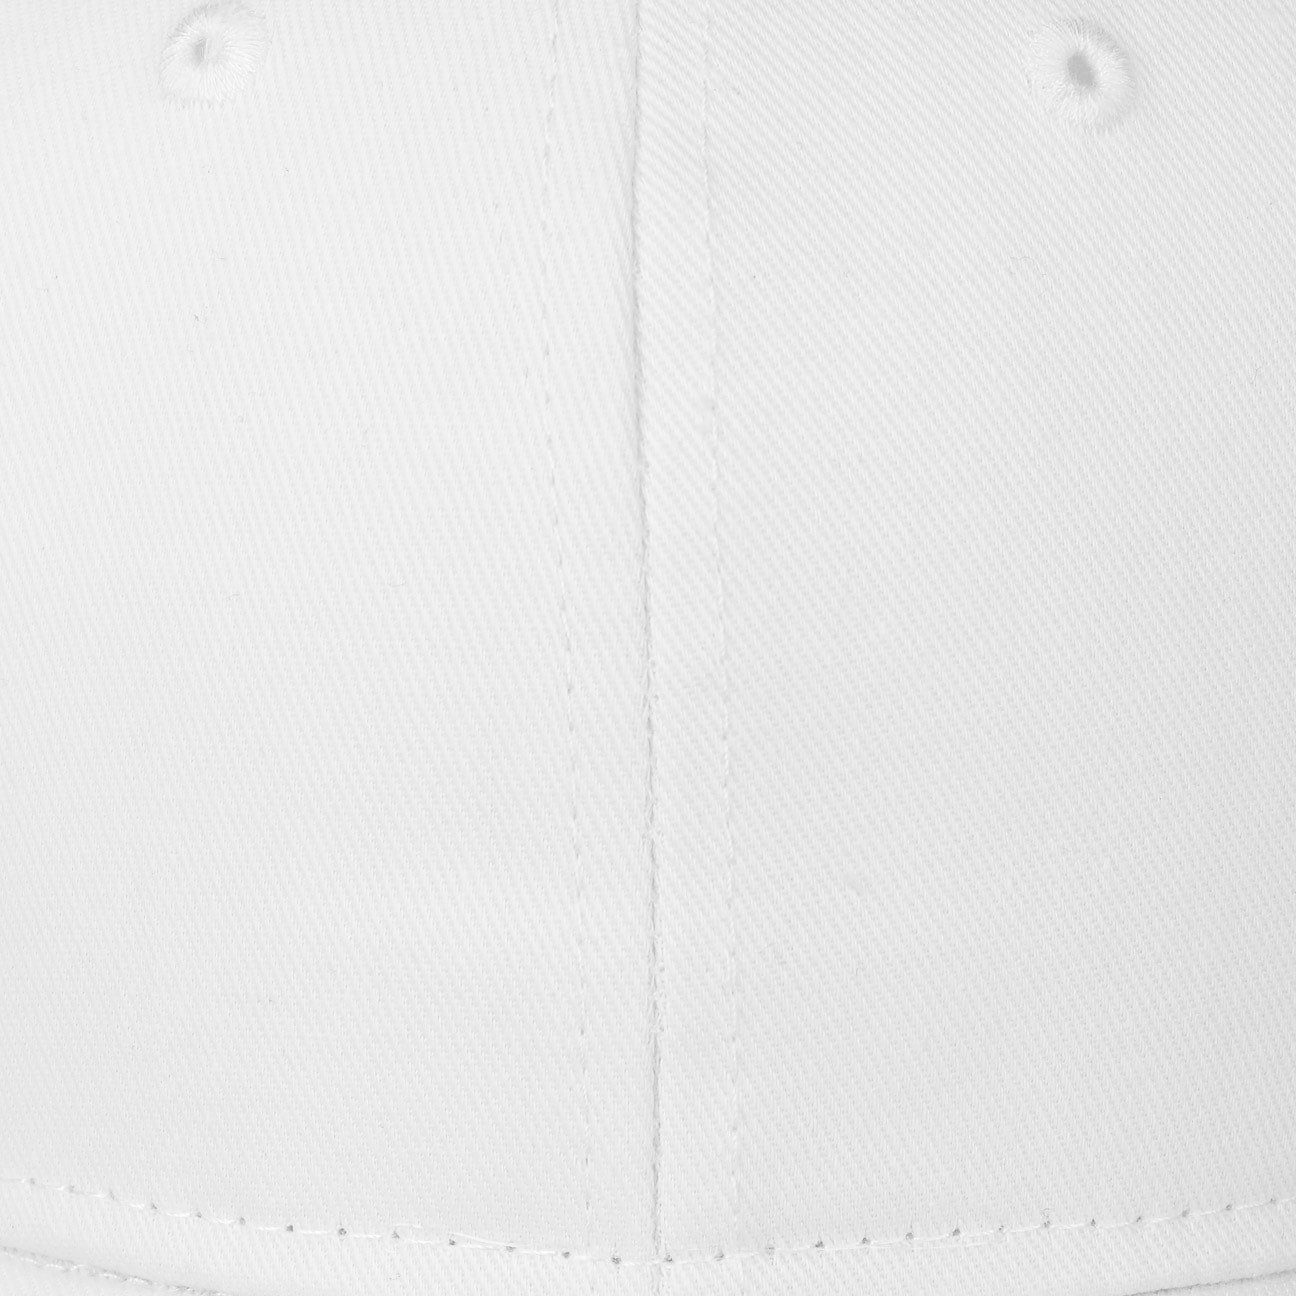 Atlantis Baseball Cap (1-St) Basecap weiß Schirm mit